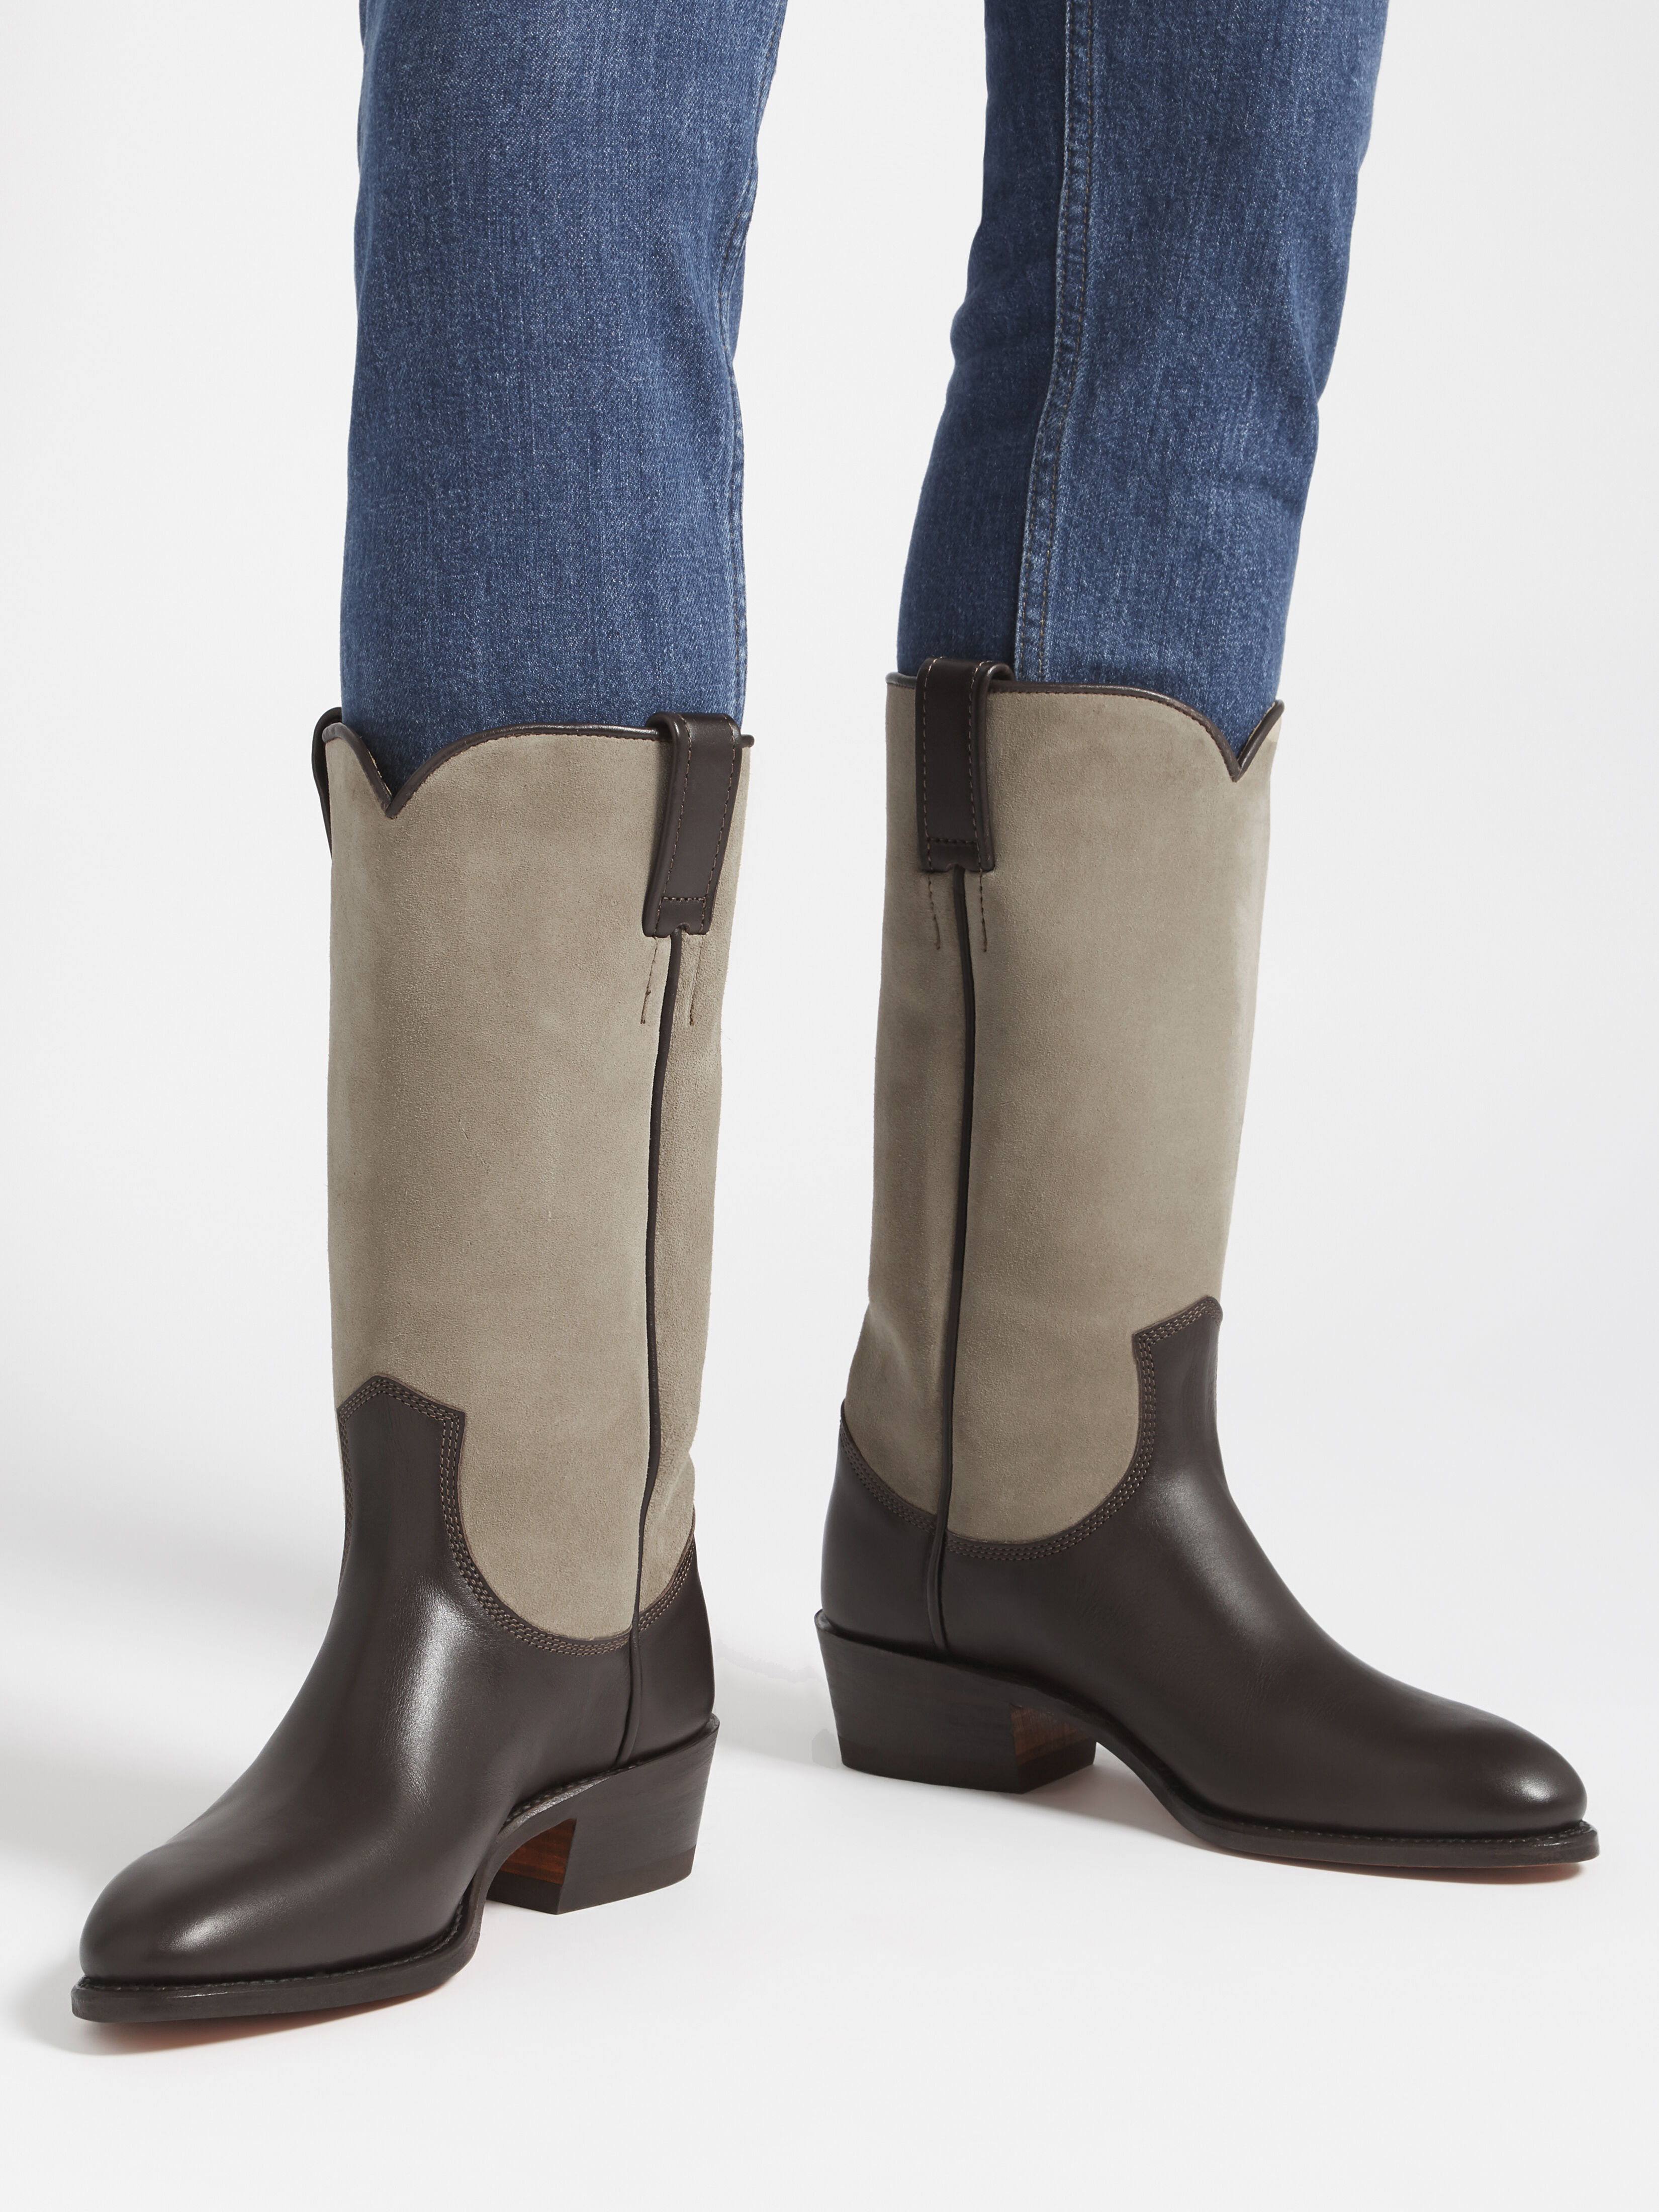 Authentic Bronc Top boot - Men's Boots 